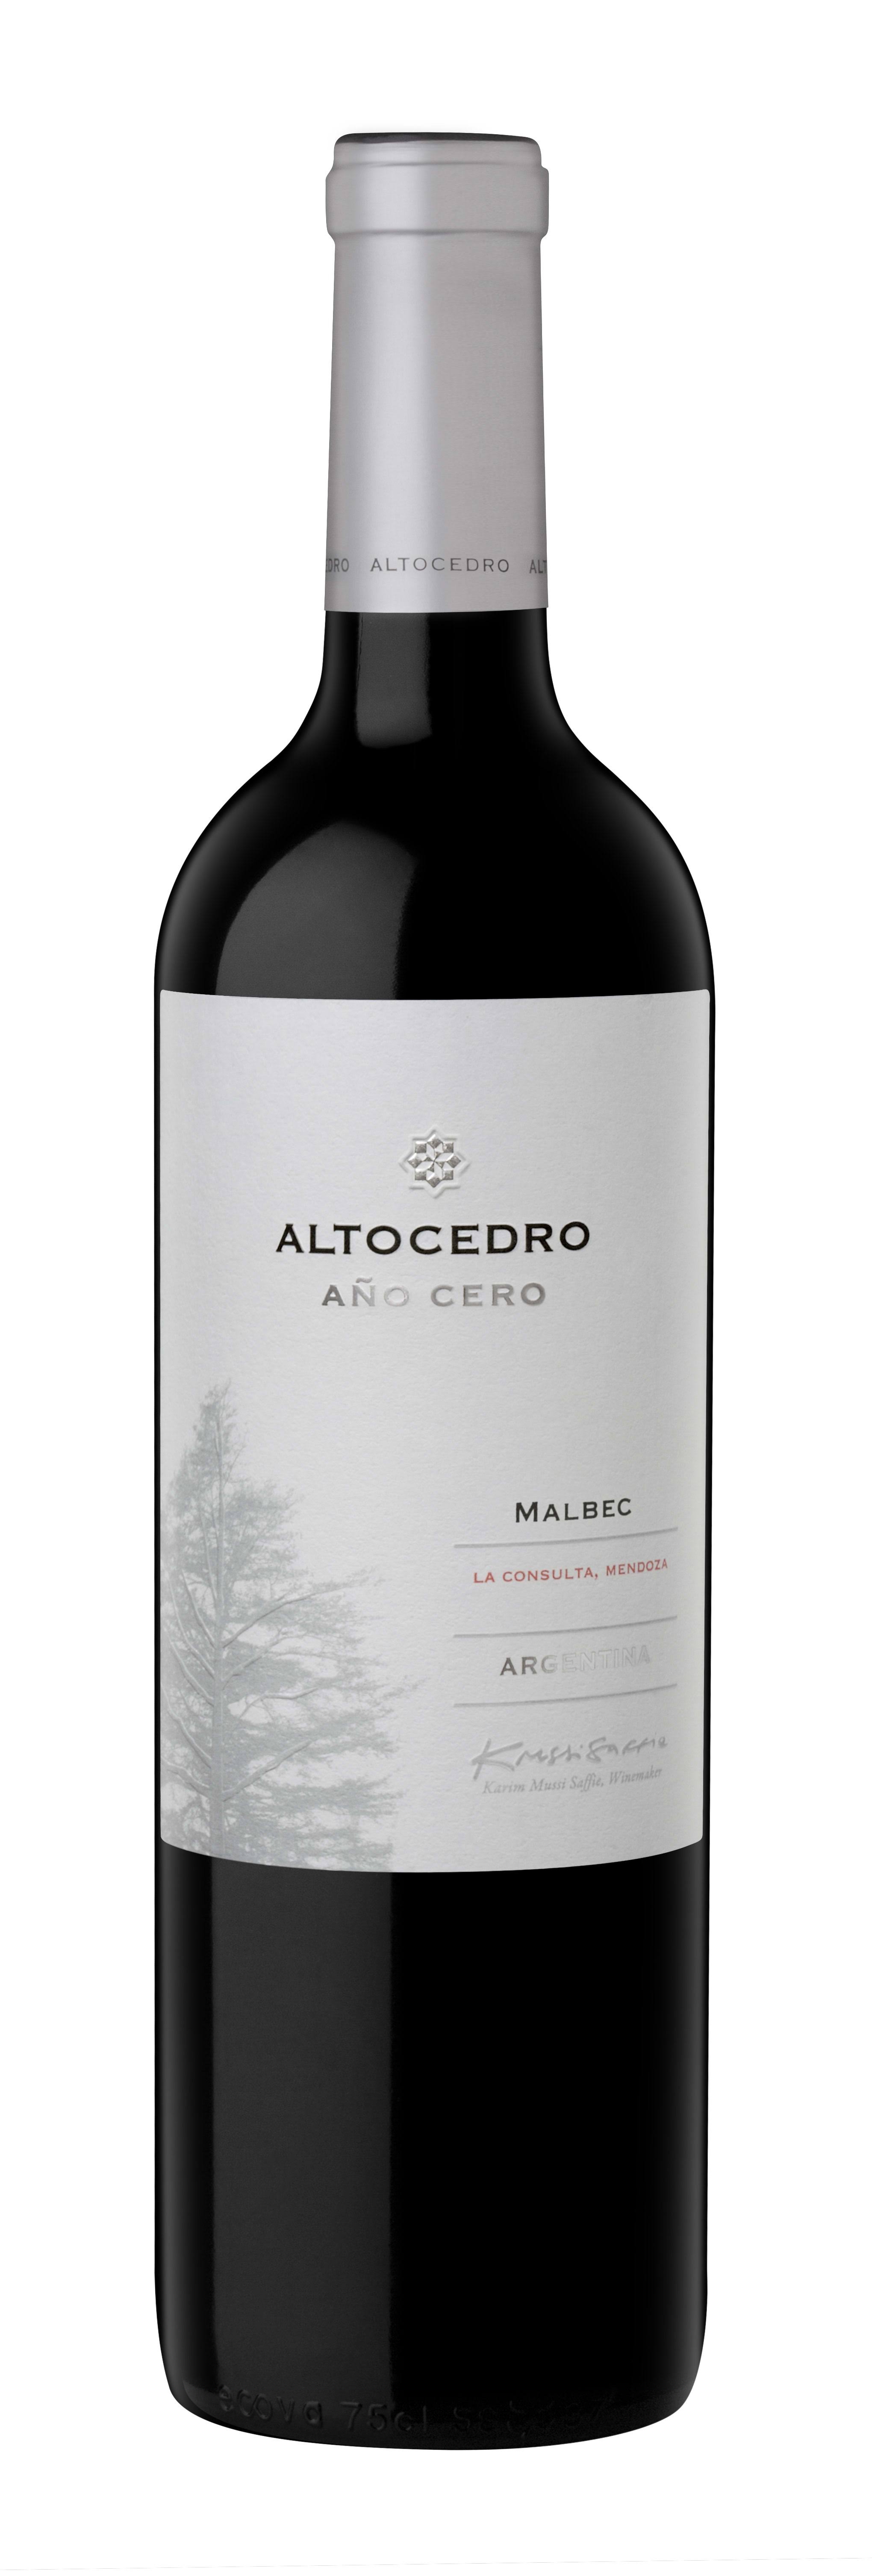 Altocedro Malbec, Mendoza (Vintage Varies) - 750 ml bottle